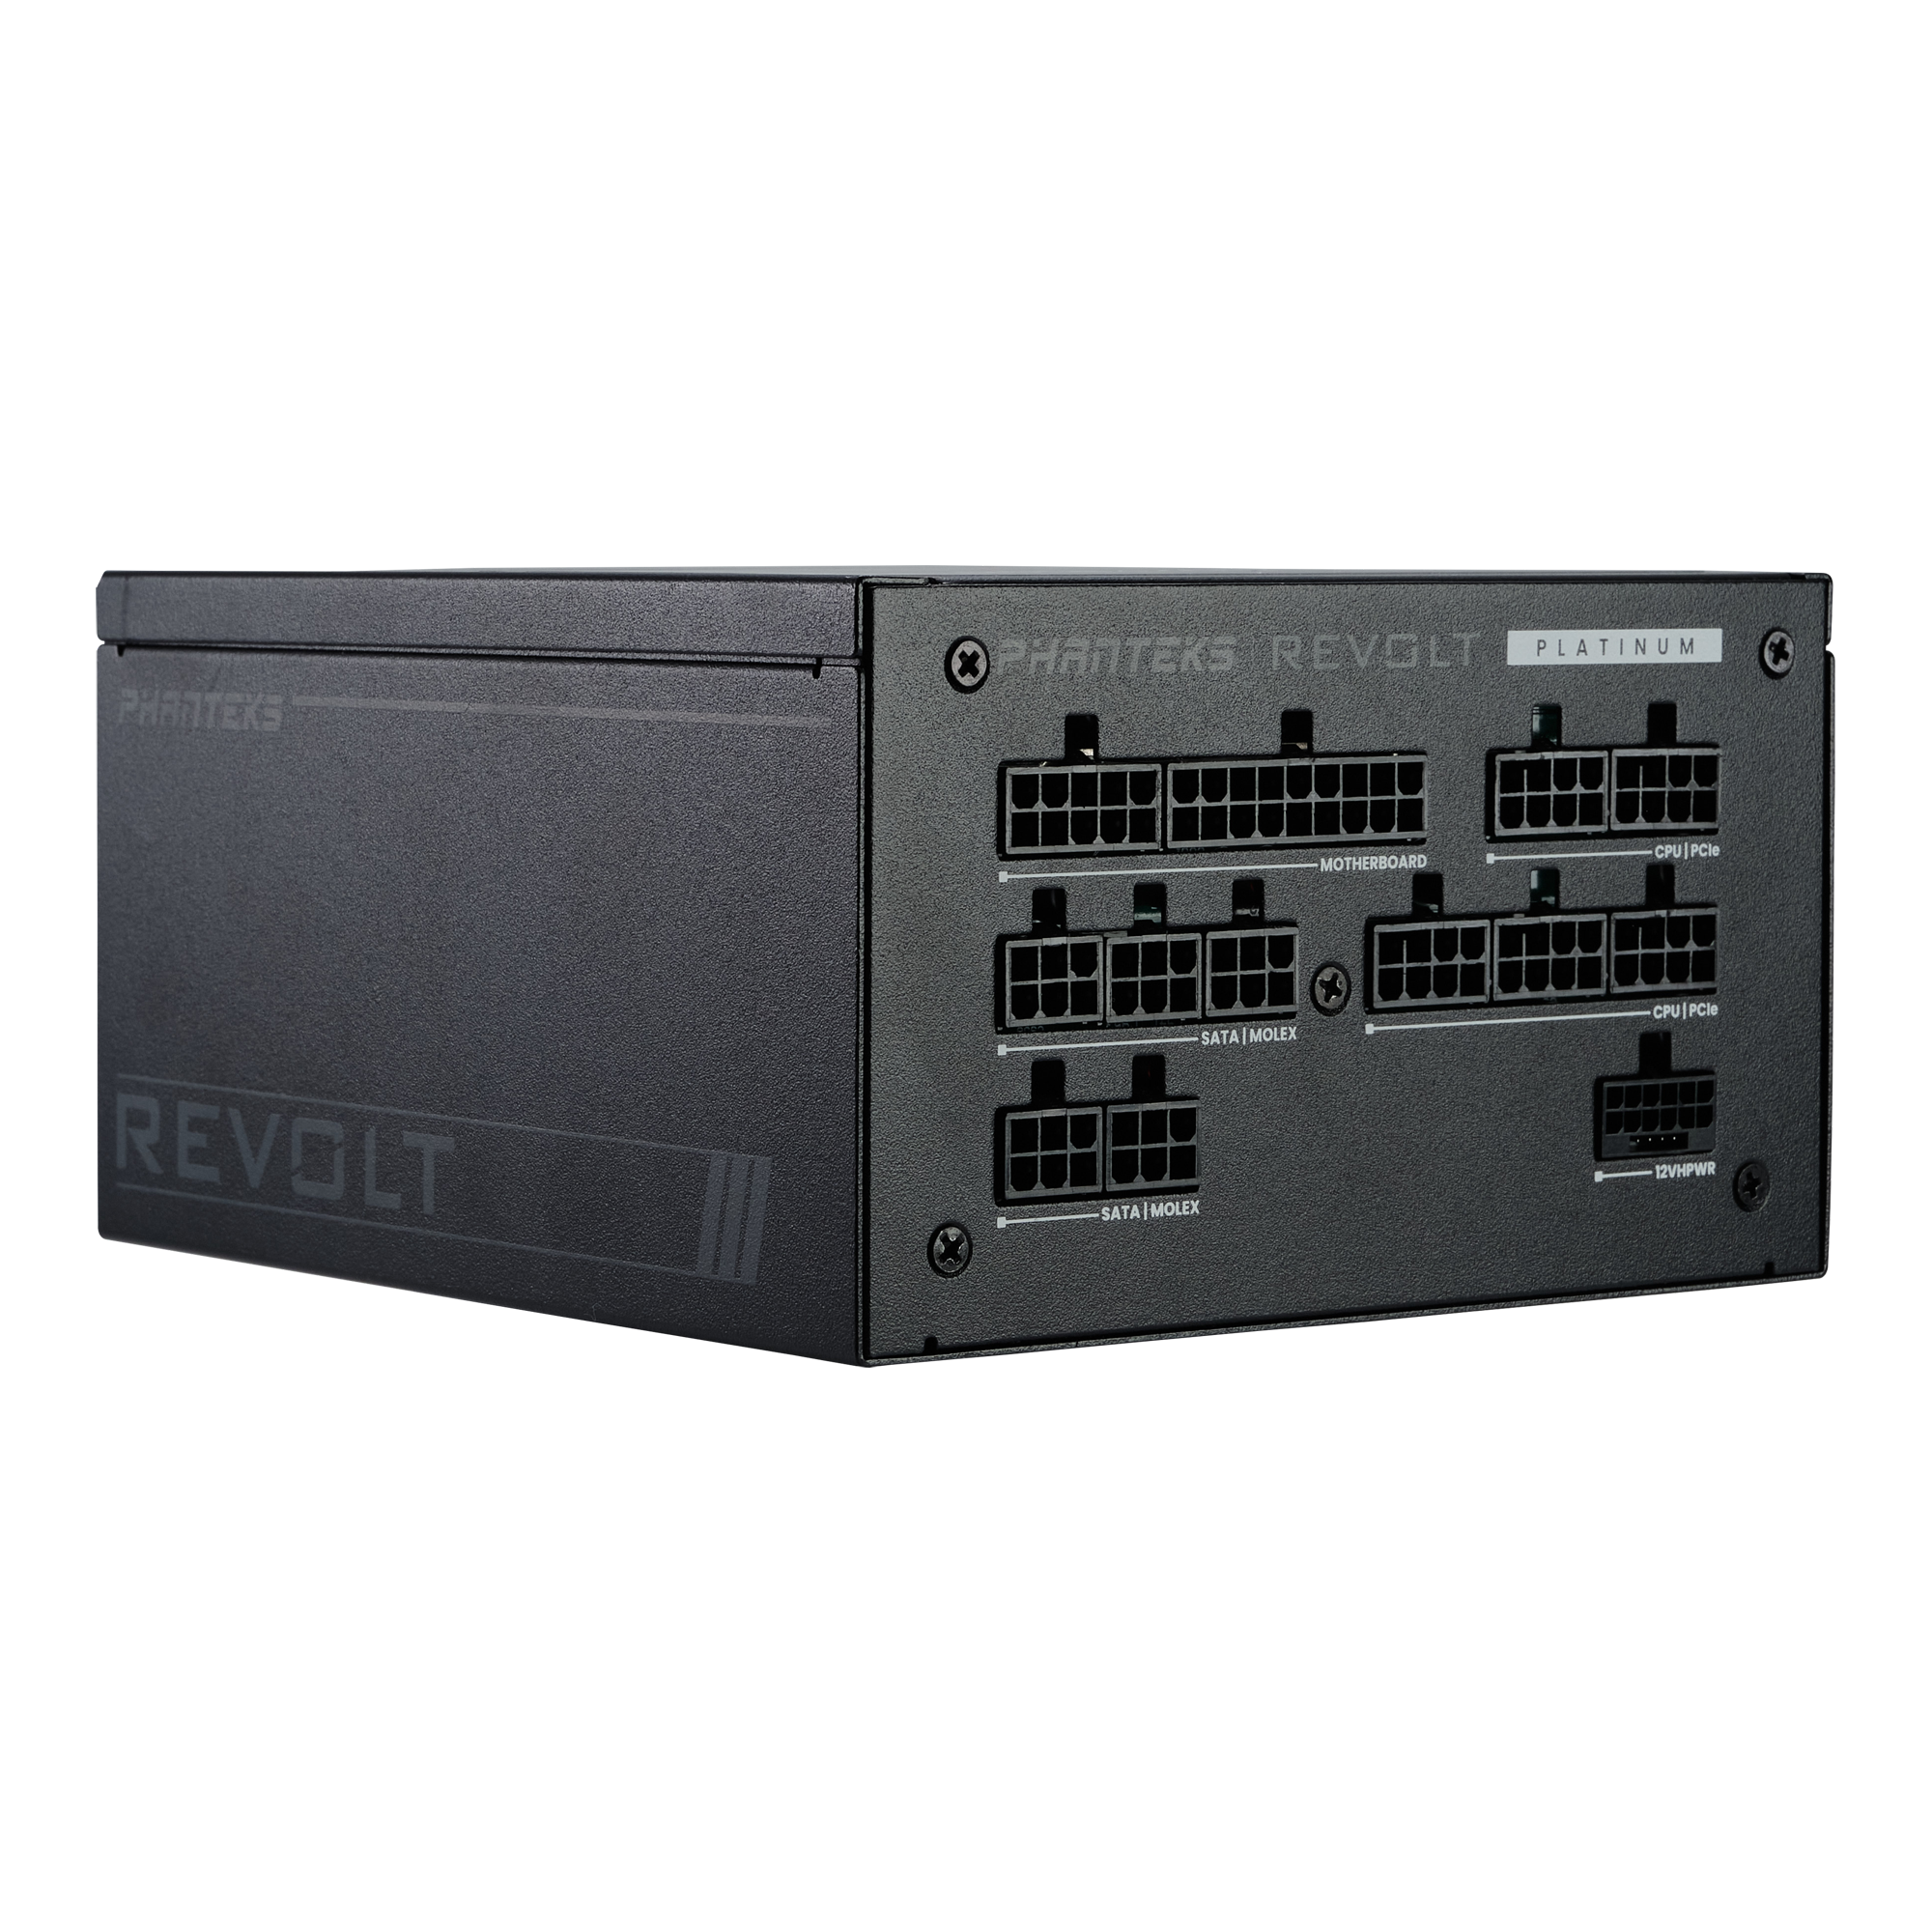 Phanteks - Phanteks Revolt Cableless 1000W ATX 3.0 PCIe 5.0 Modular 80 Plus Platinum Power Supply - Black